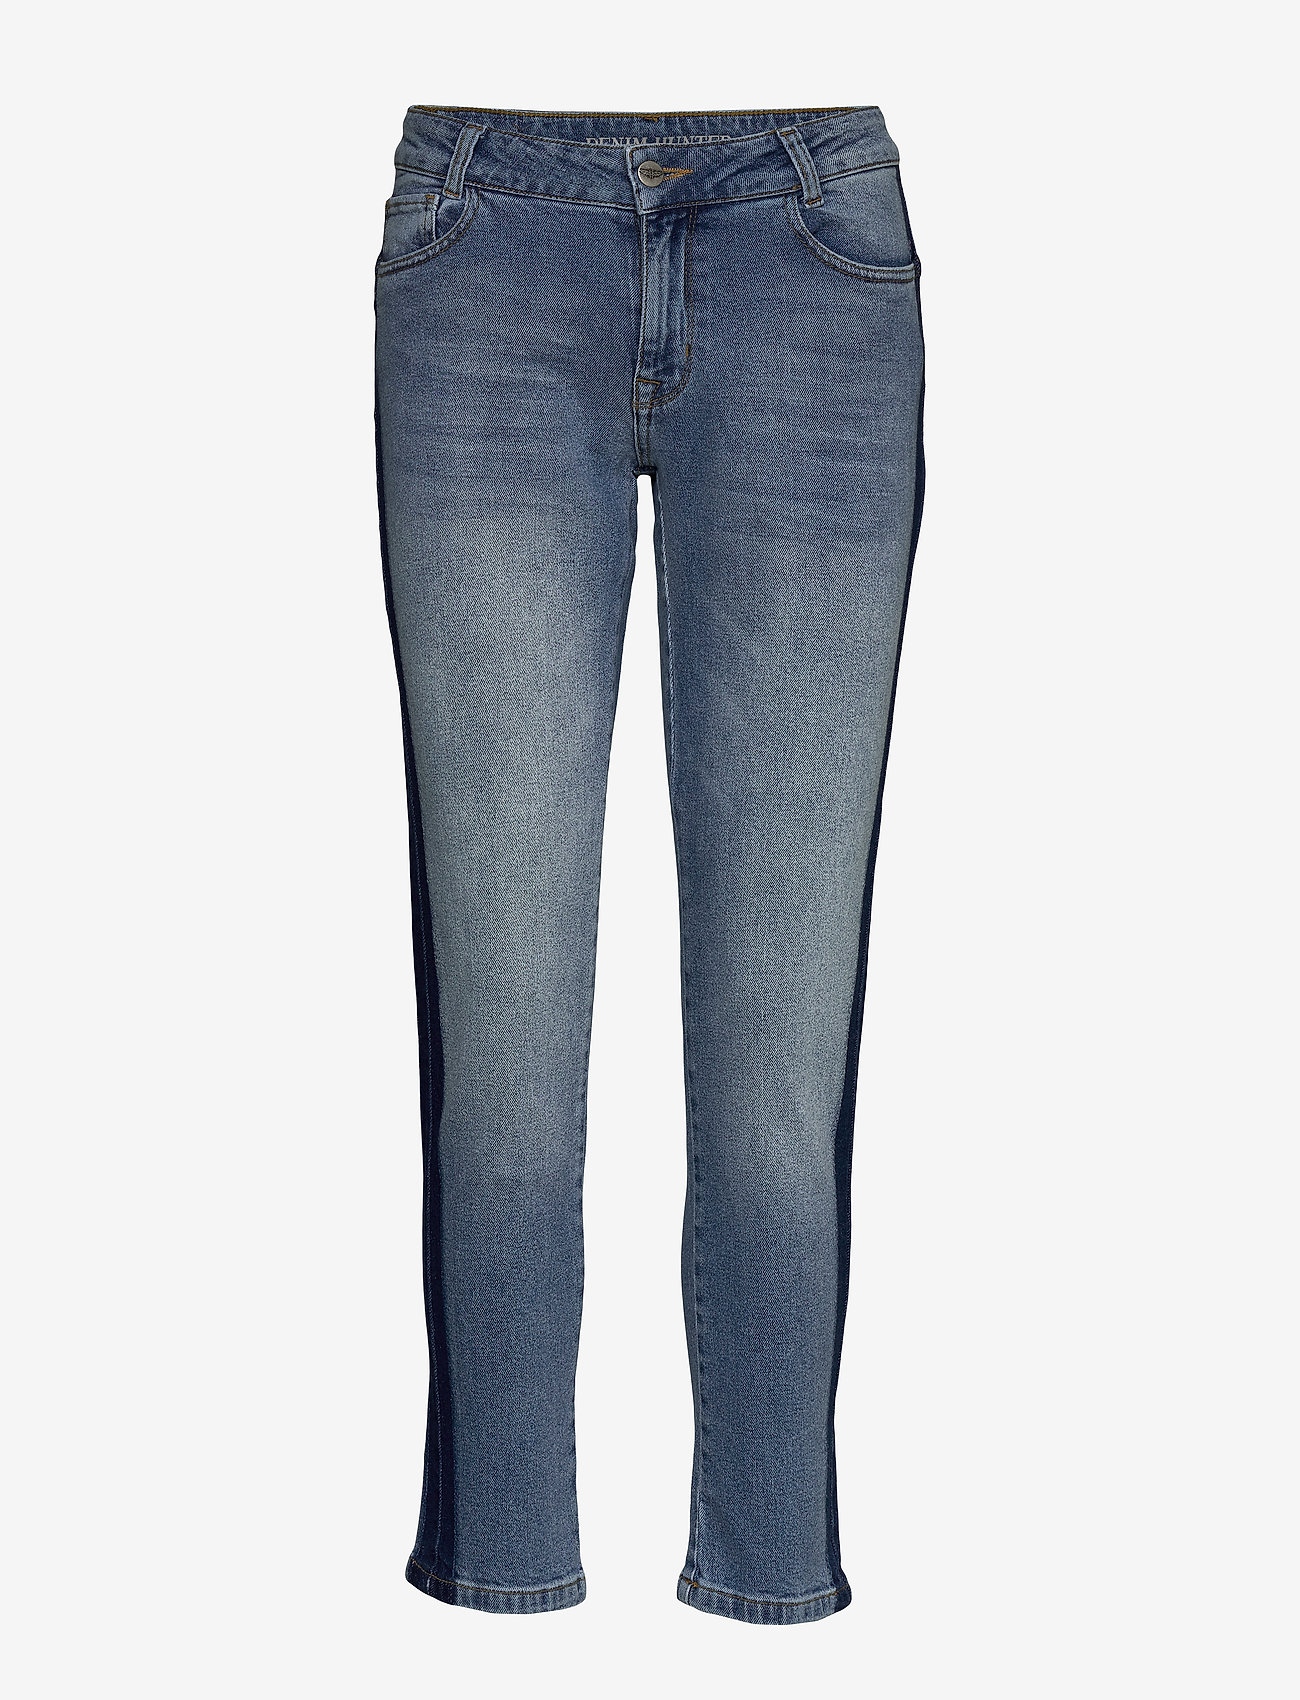 Denim Hunter - DHIsla 7/8 Custom - mom jeans - vintage wash - 0